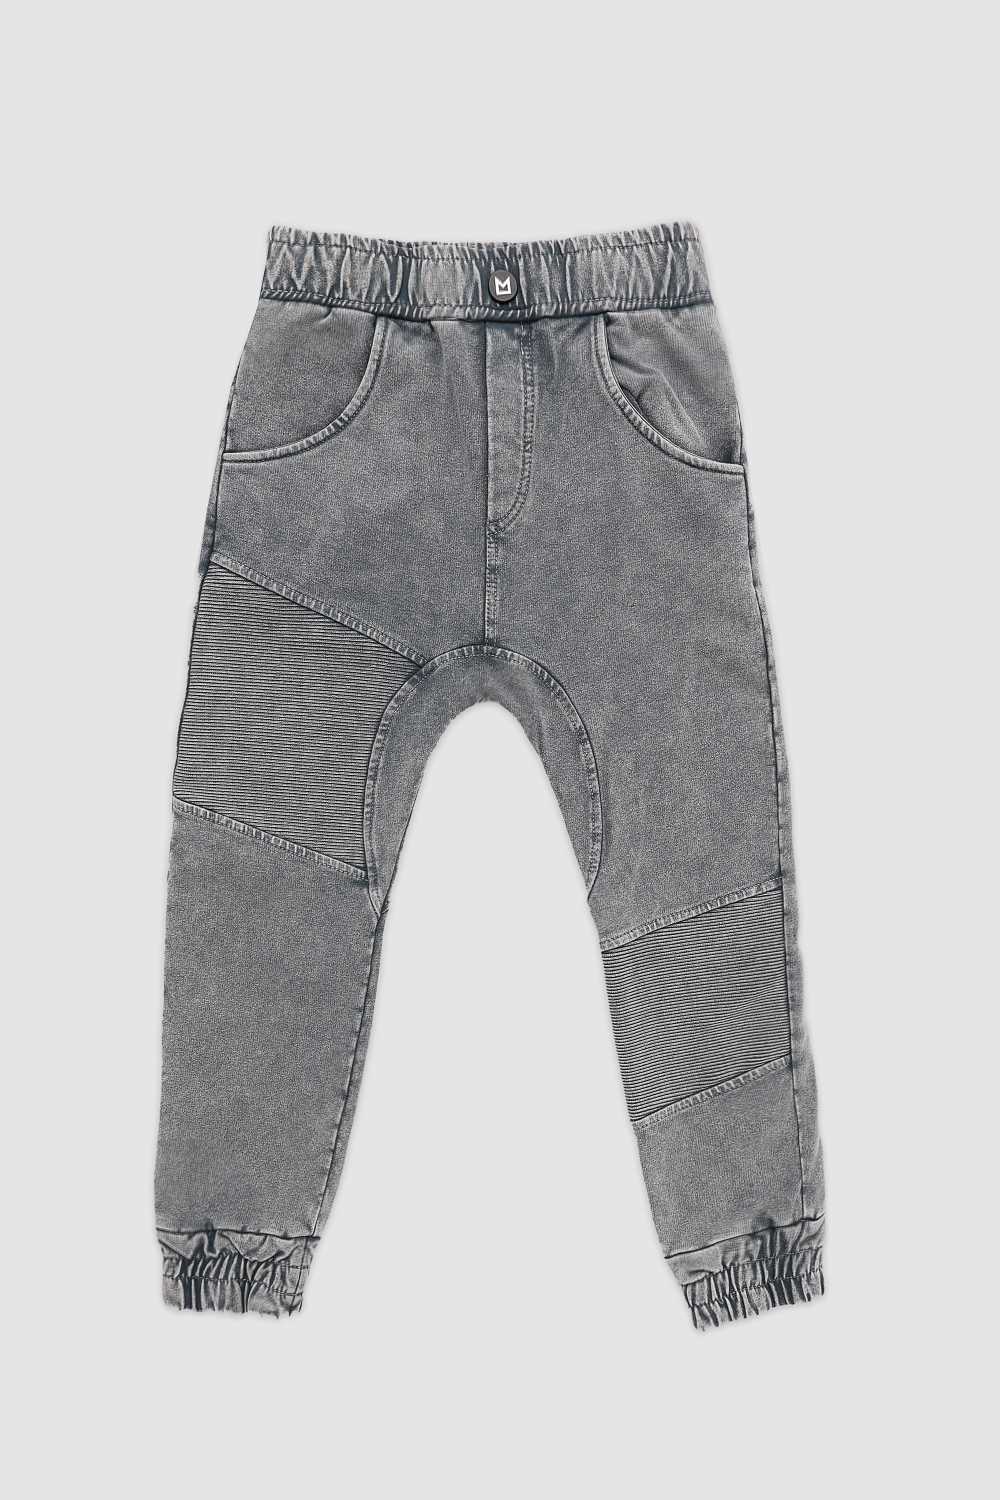 Vintage Grey Panel Pants